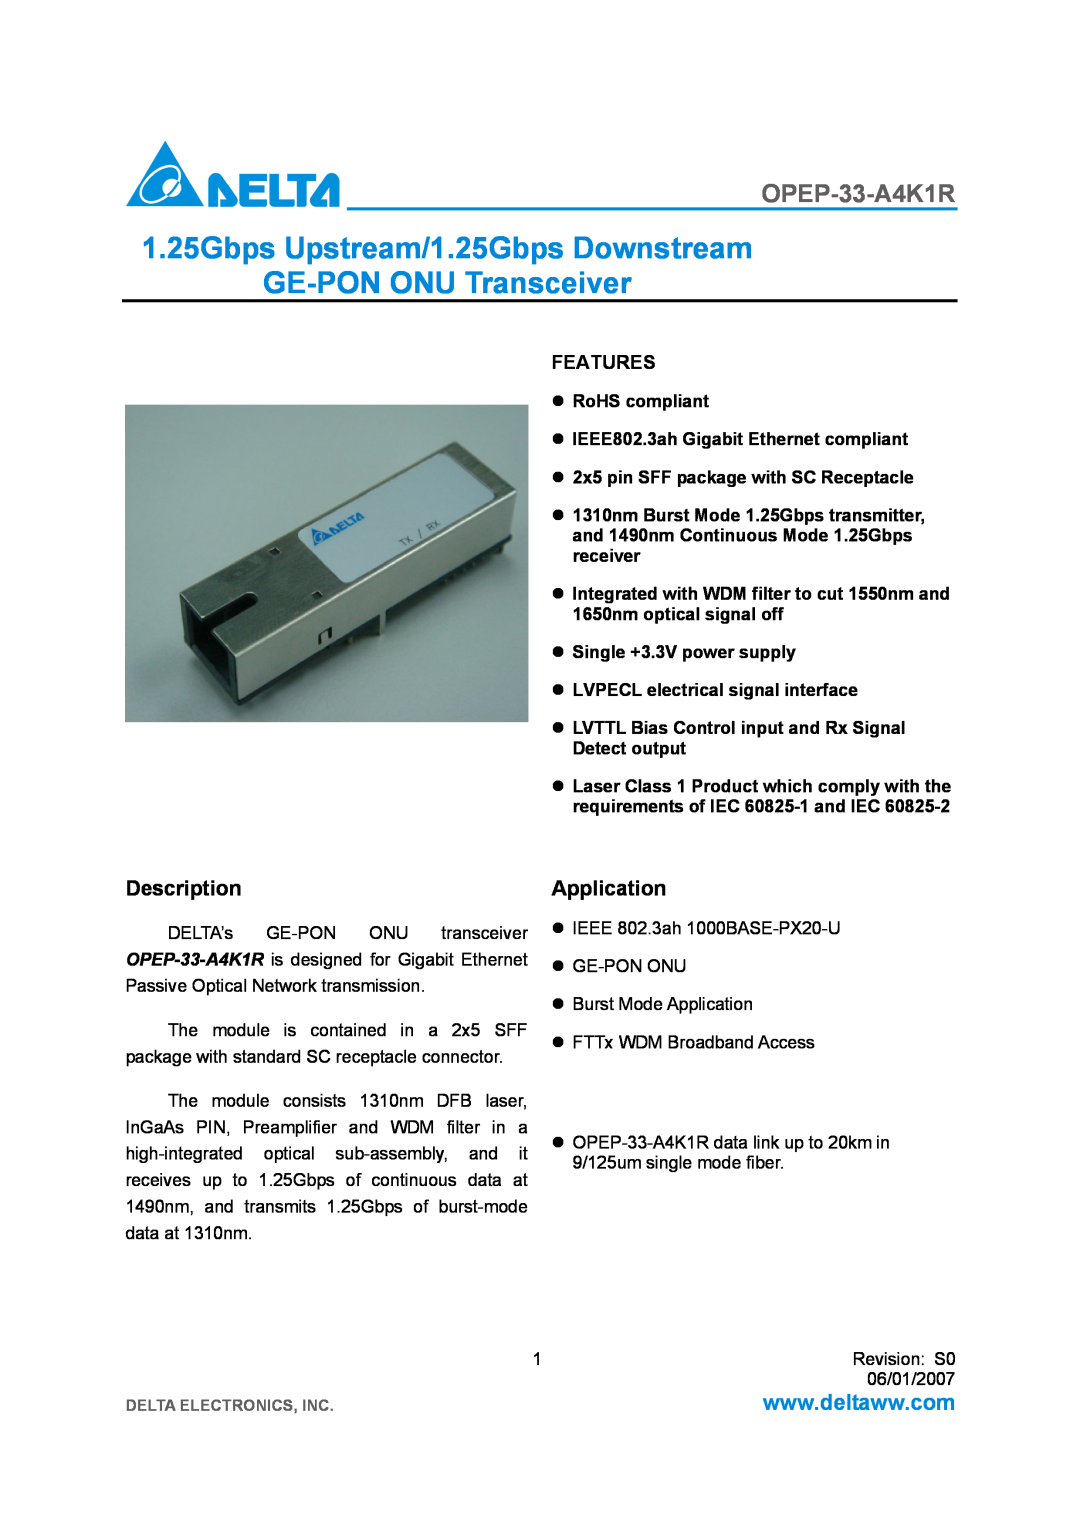 Delta Electronics OPEP-33-A4K1R manual Description, Application, Features 